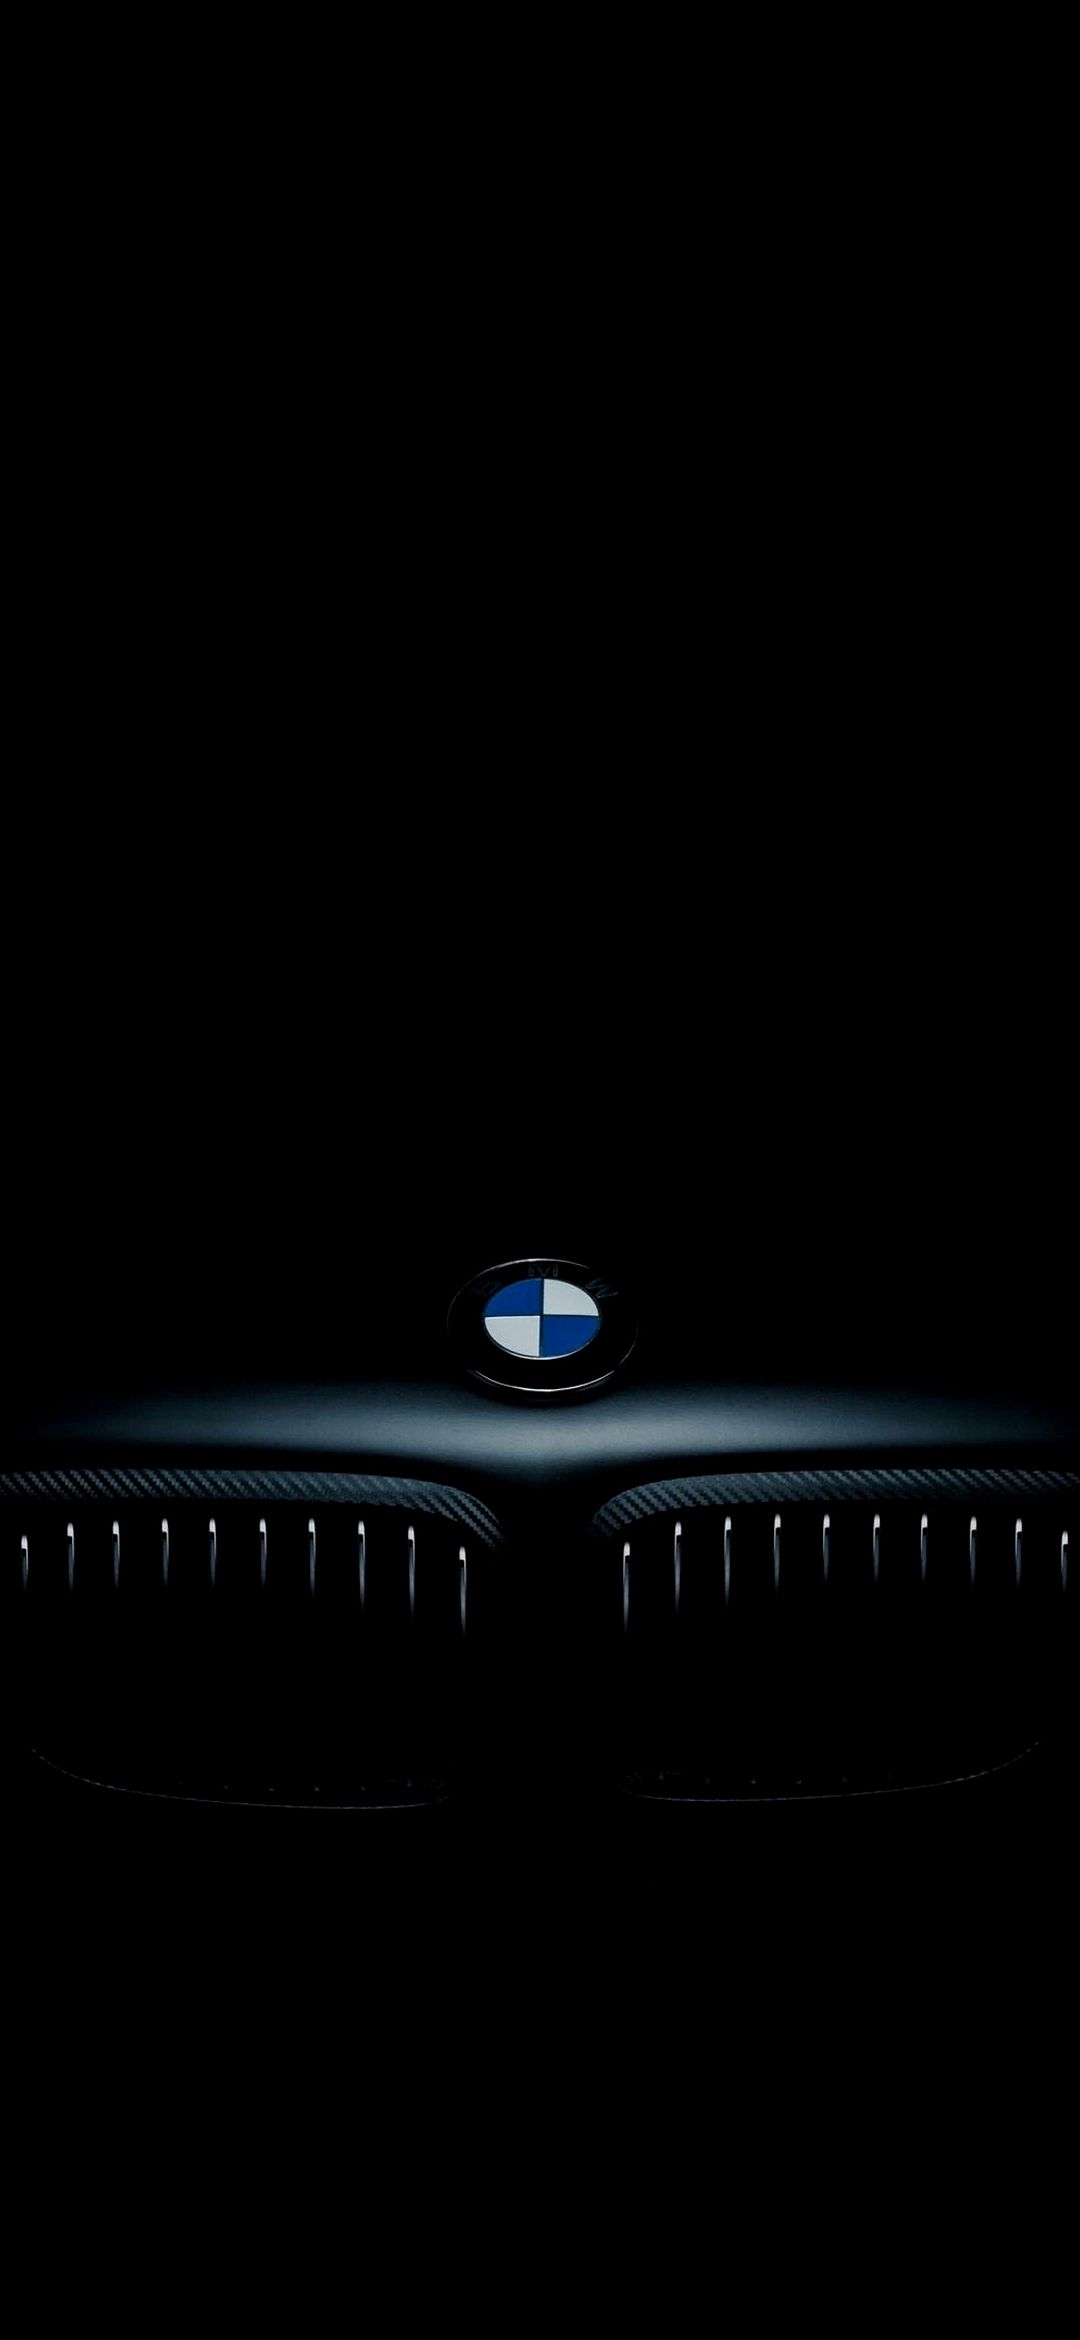 BMW AMOLED Wallpaper 10802340. Bmw wallpaper, Car iphone wallpaper, Bmw m iphone wallpaper